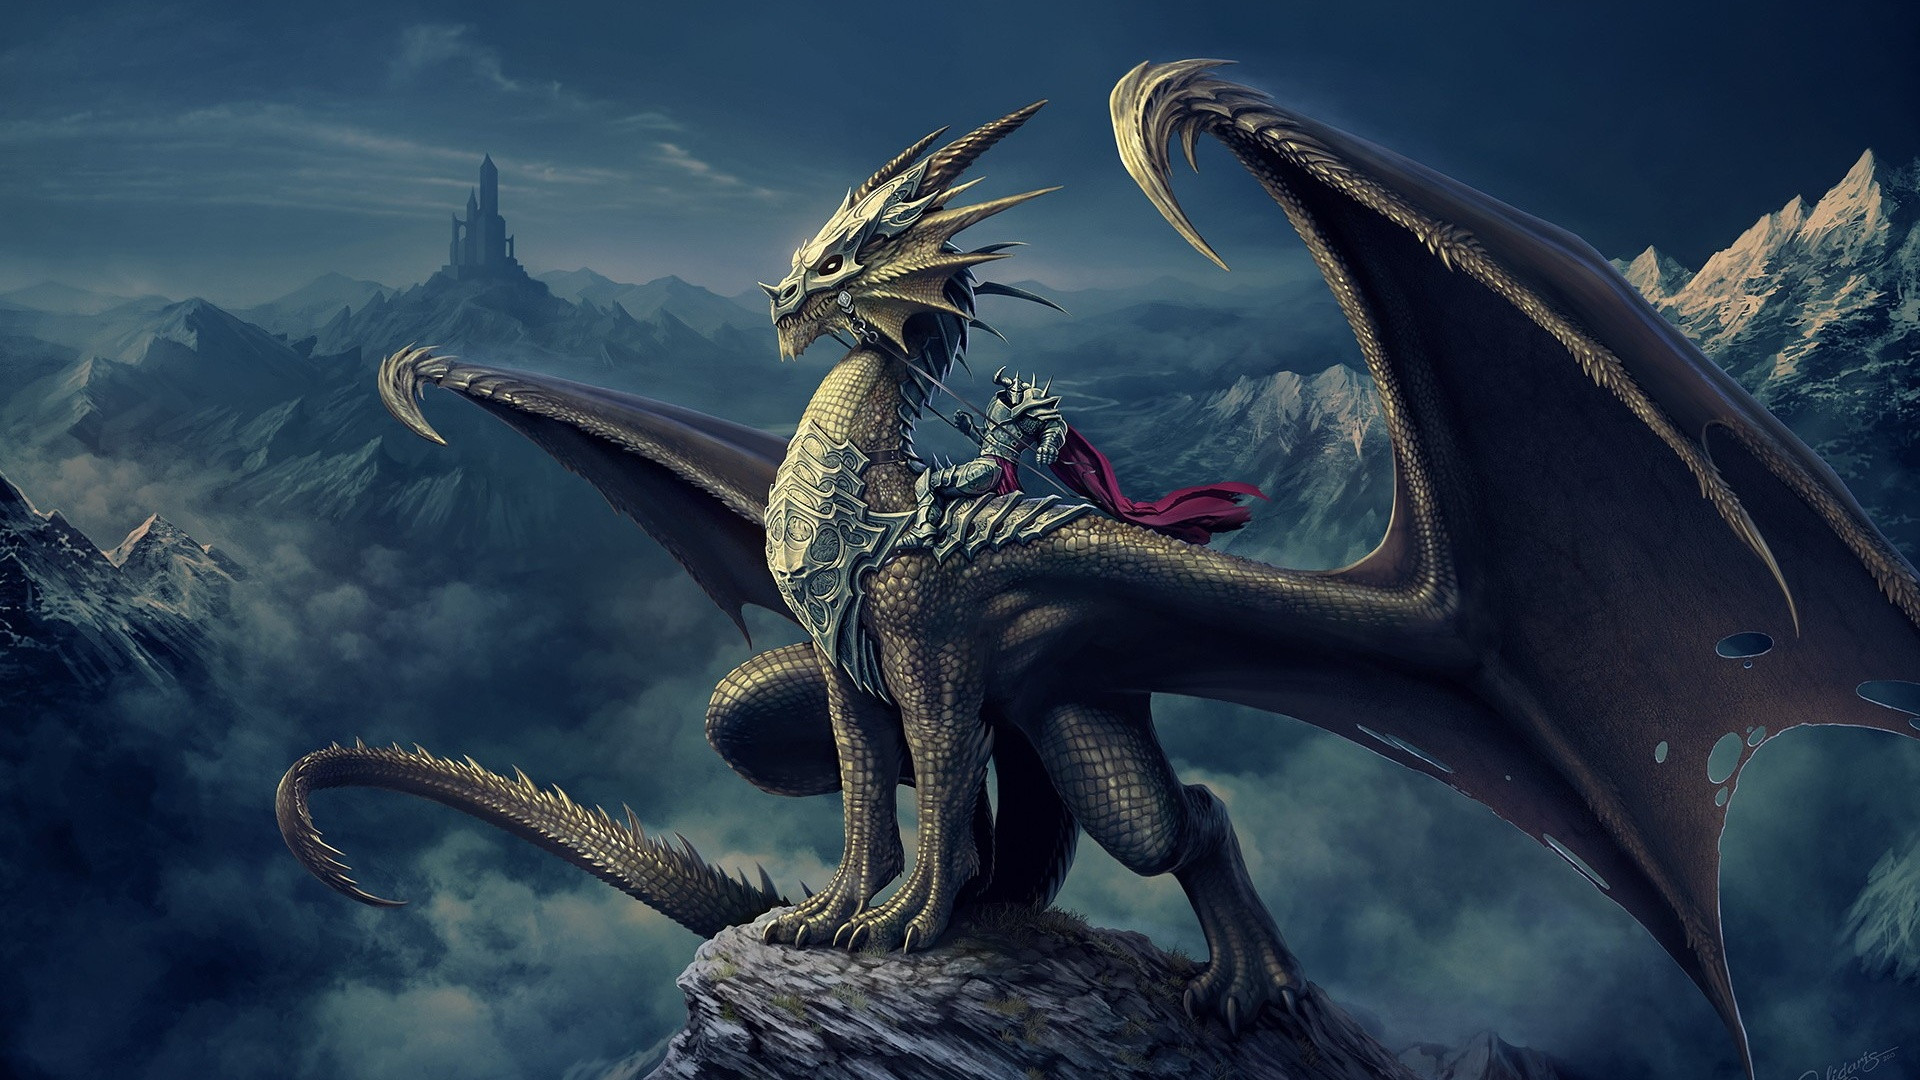 Dragon Wallpapers Hd Download Free Pixelstalknet